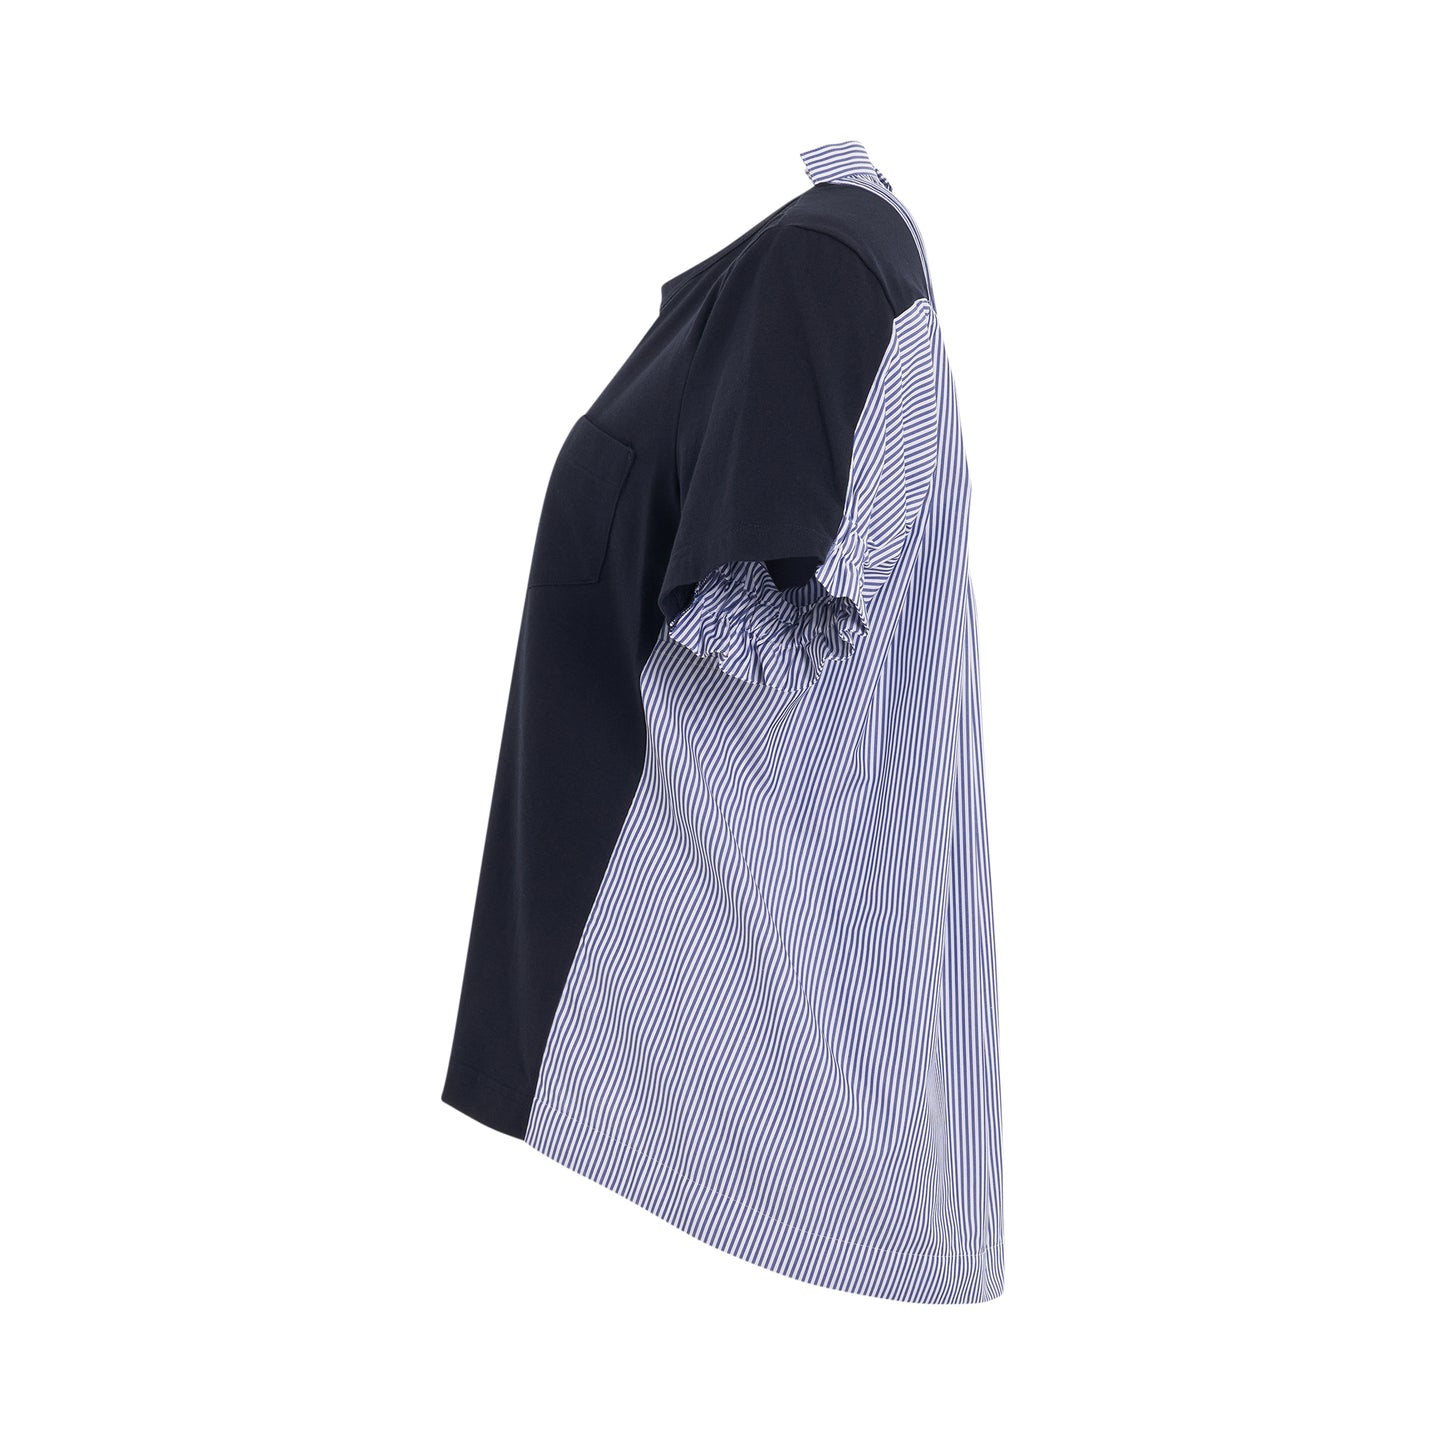 Panelled Cotton T-Shirt in Navy/Stripe